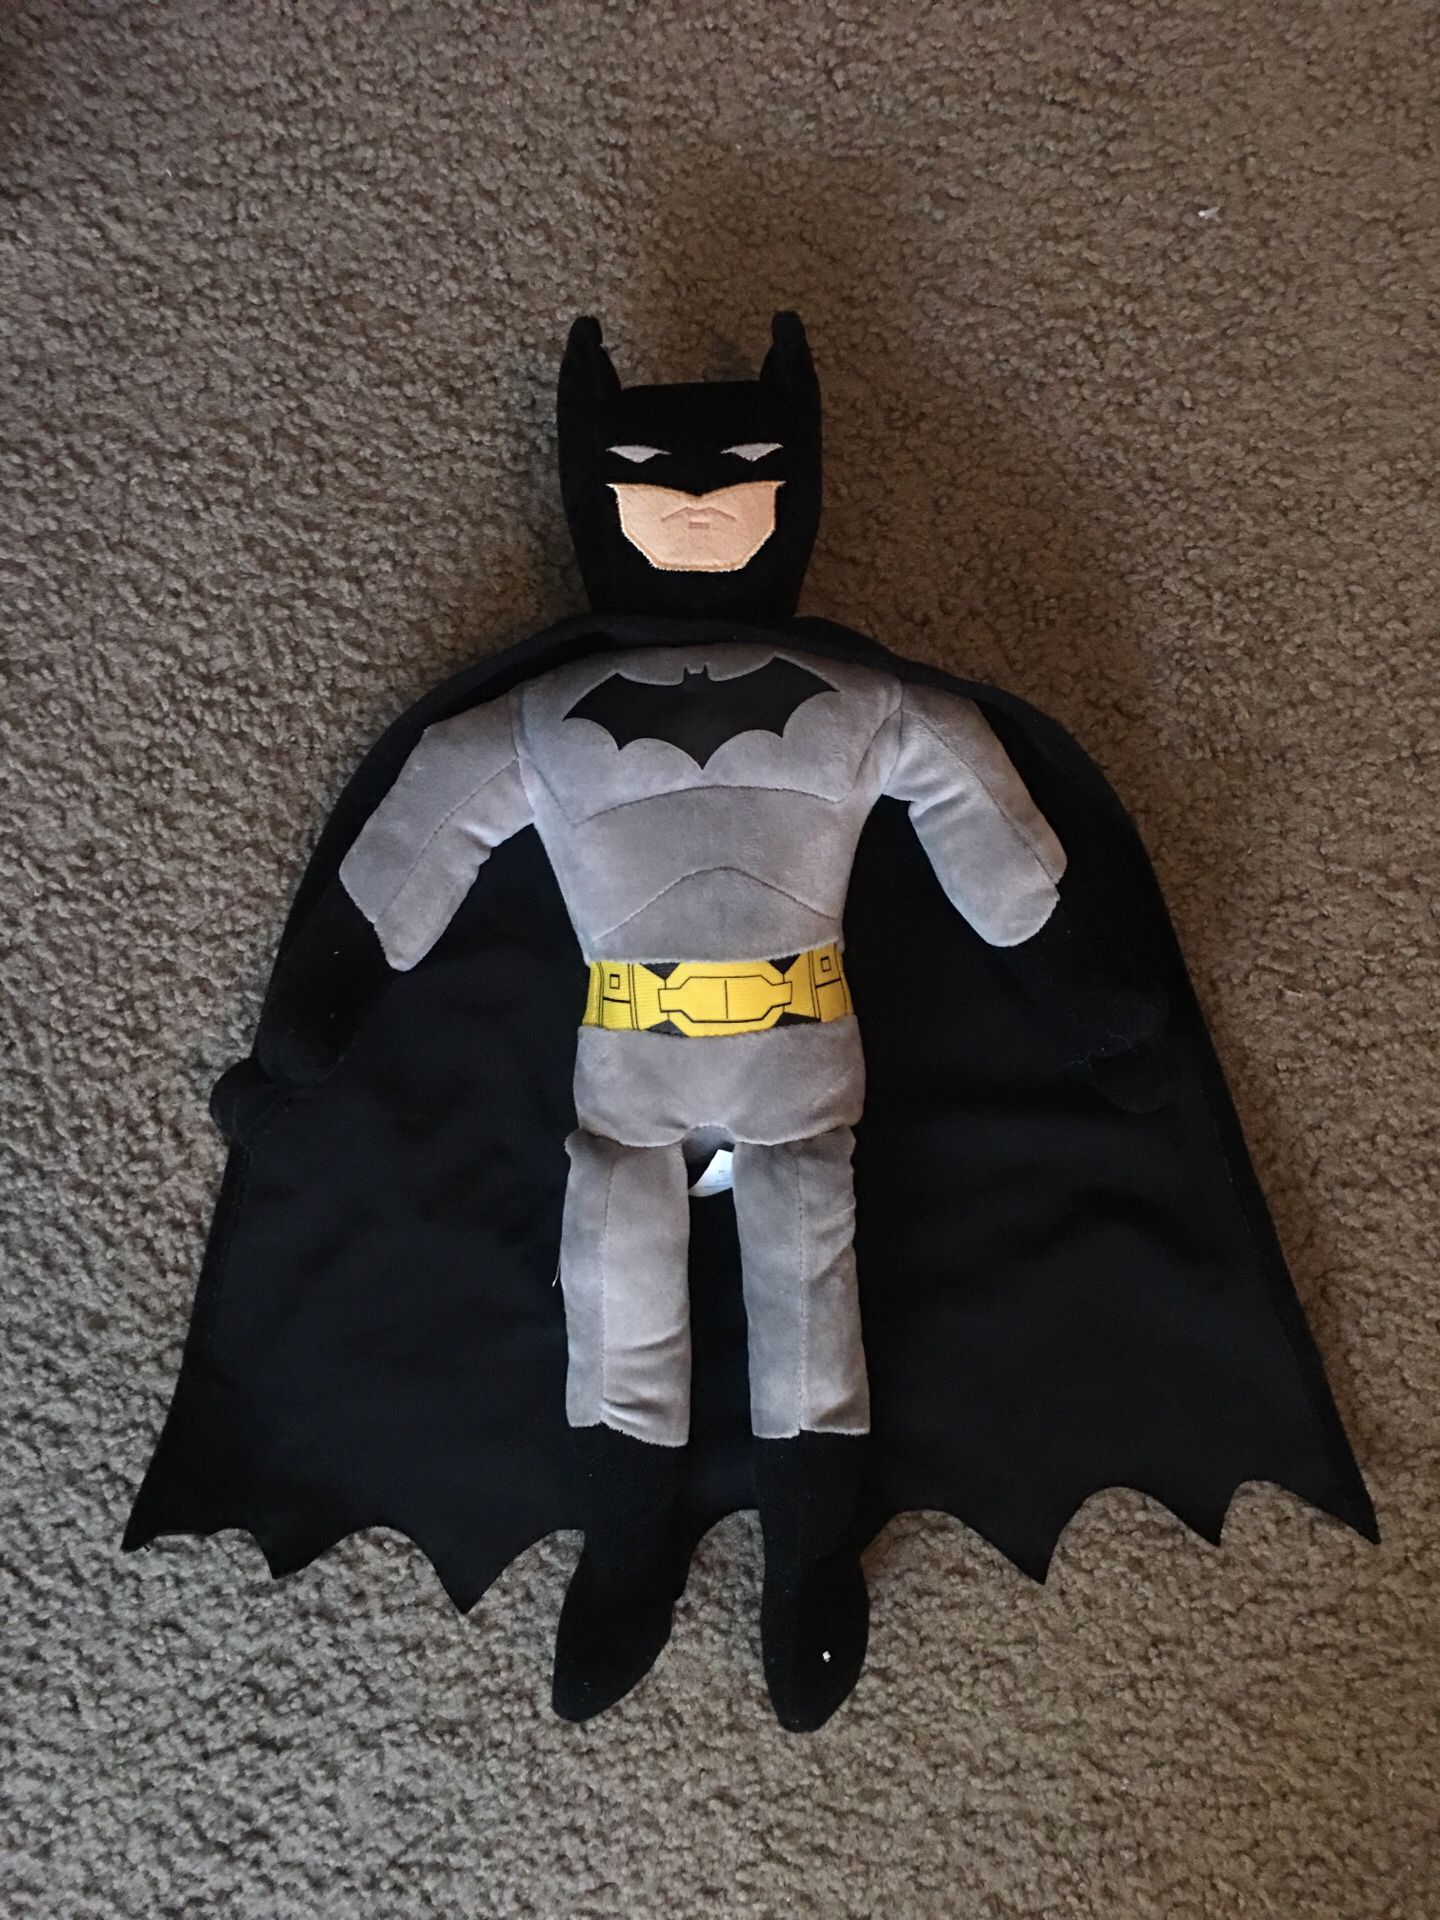 Batman Stuffed toy